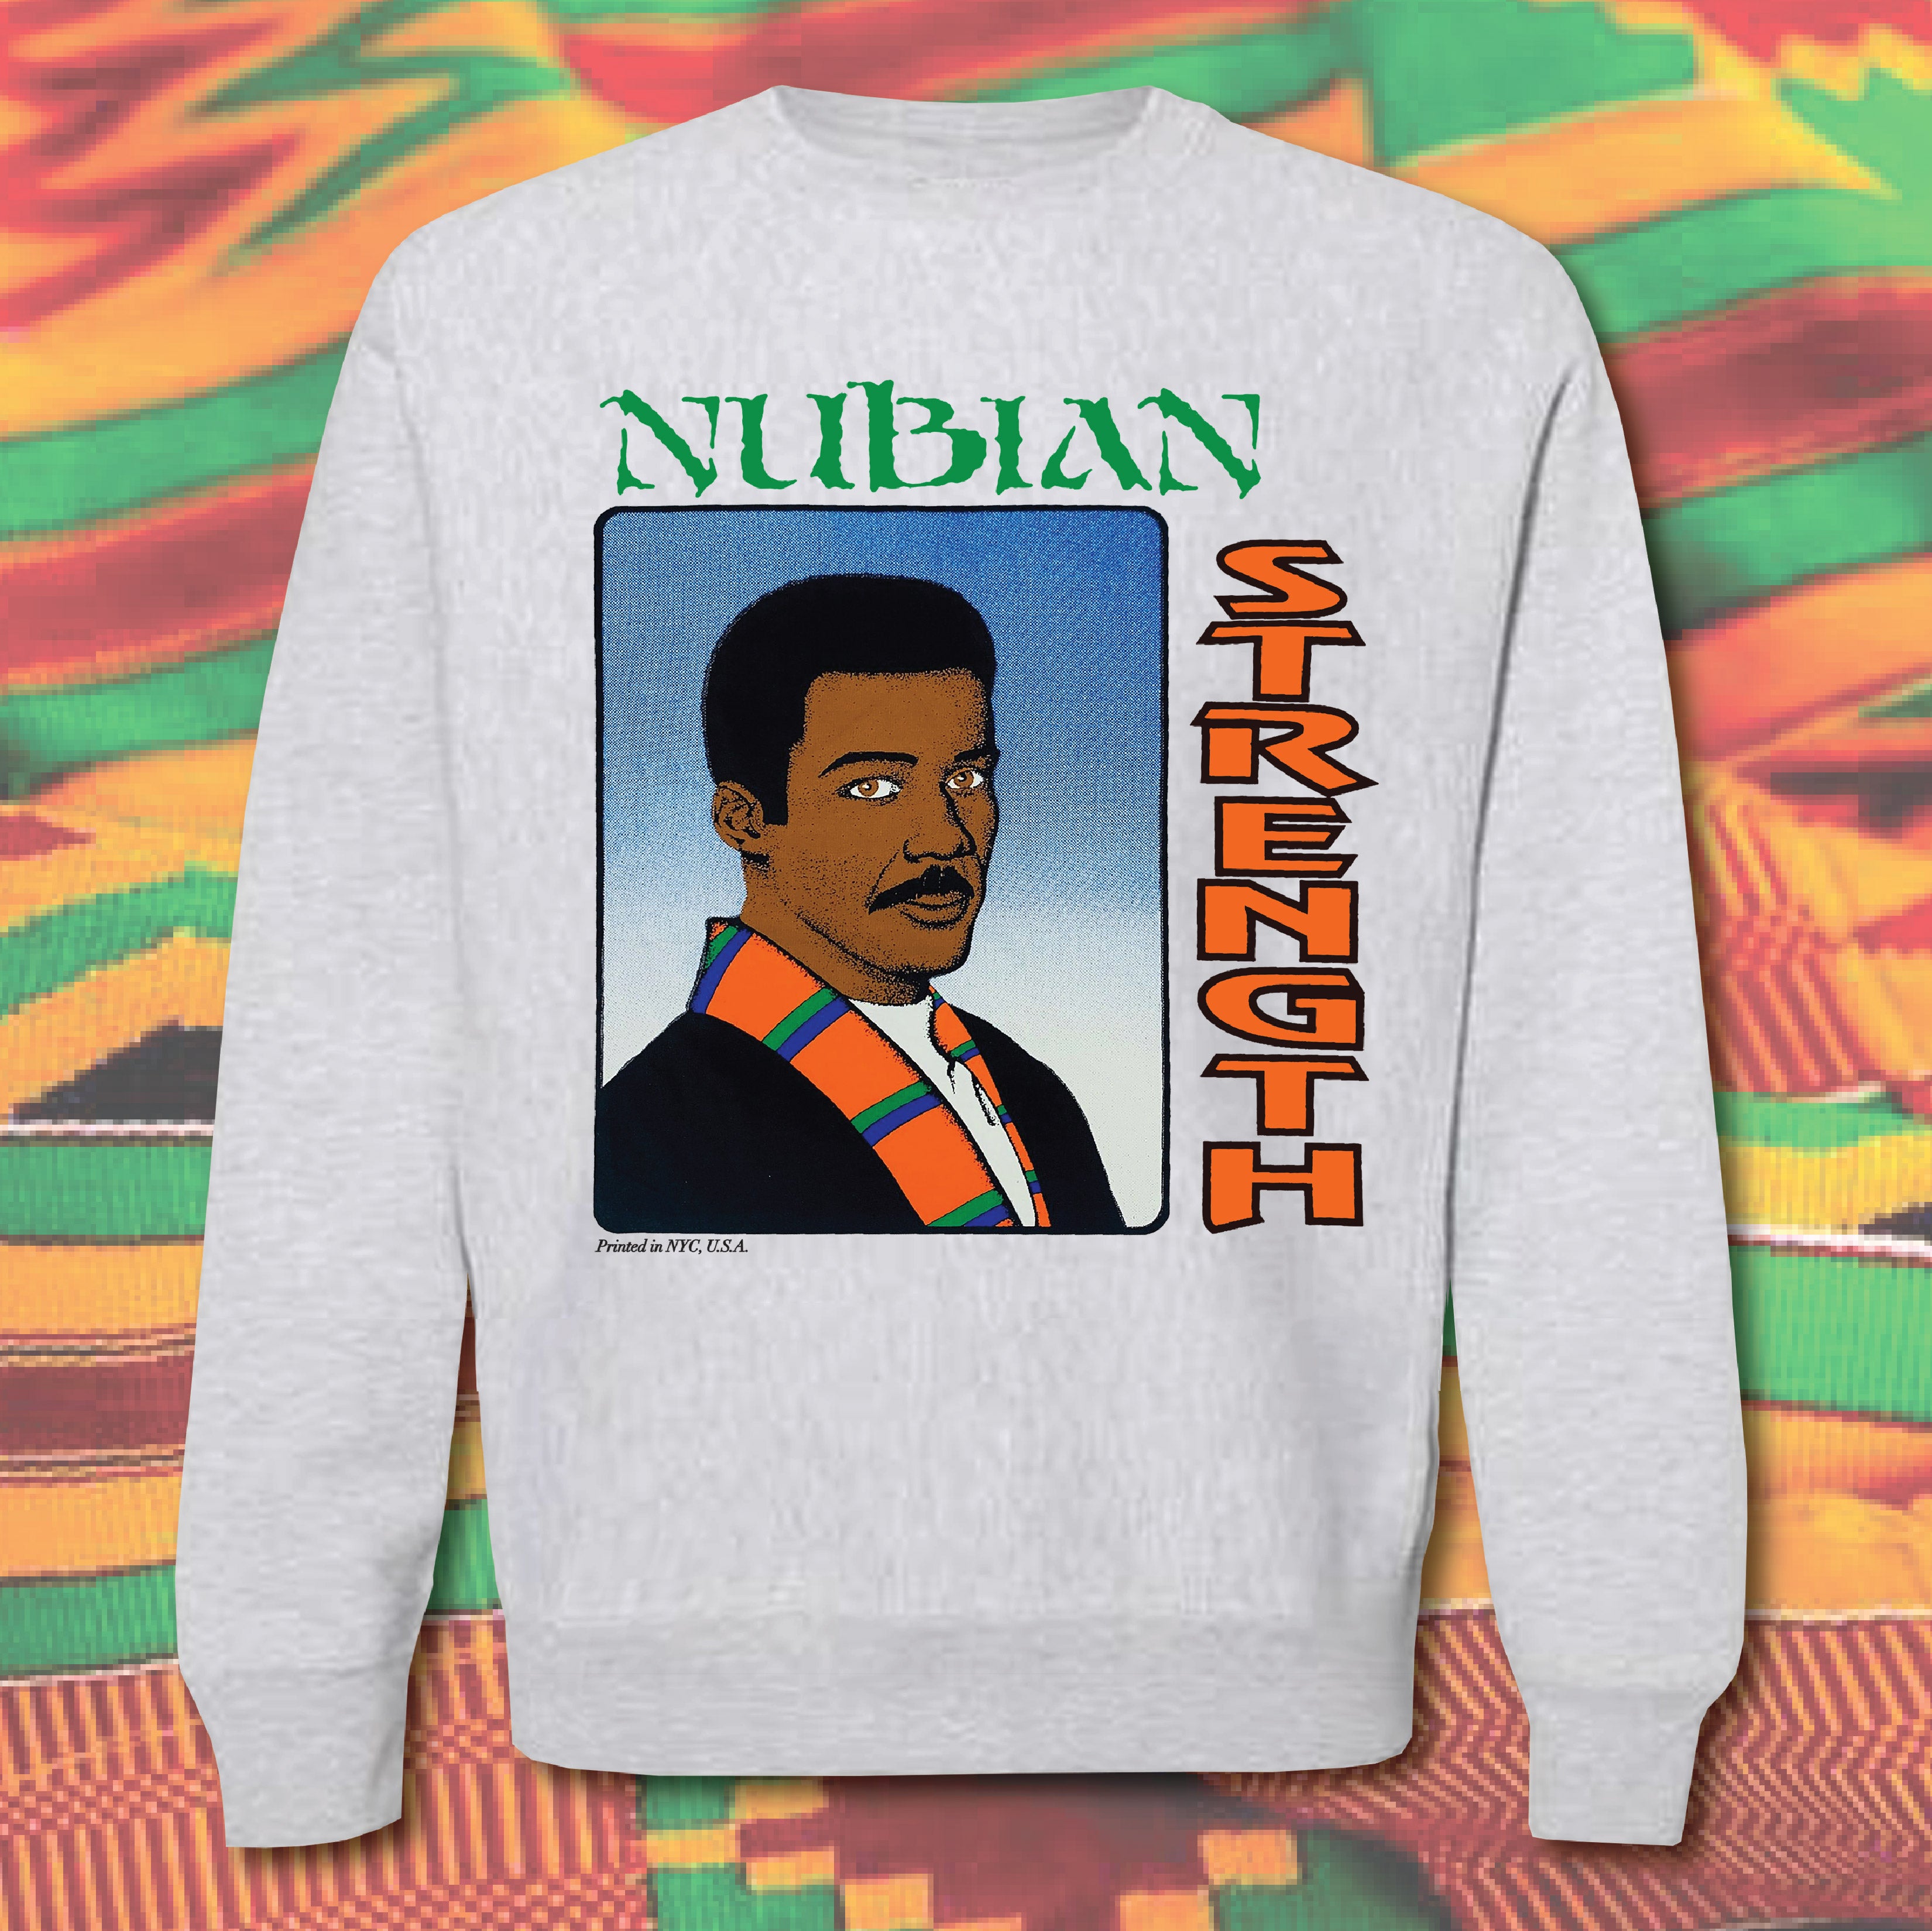 Nubian Strength Crewneck Sweatshirt